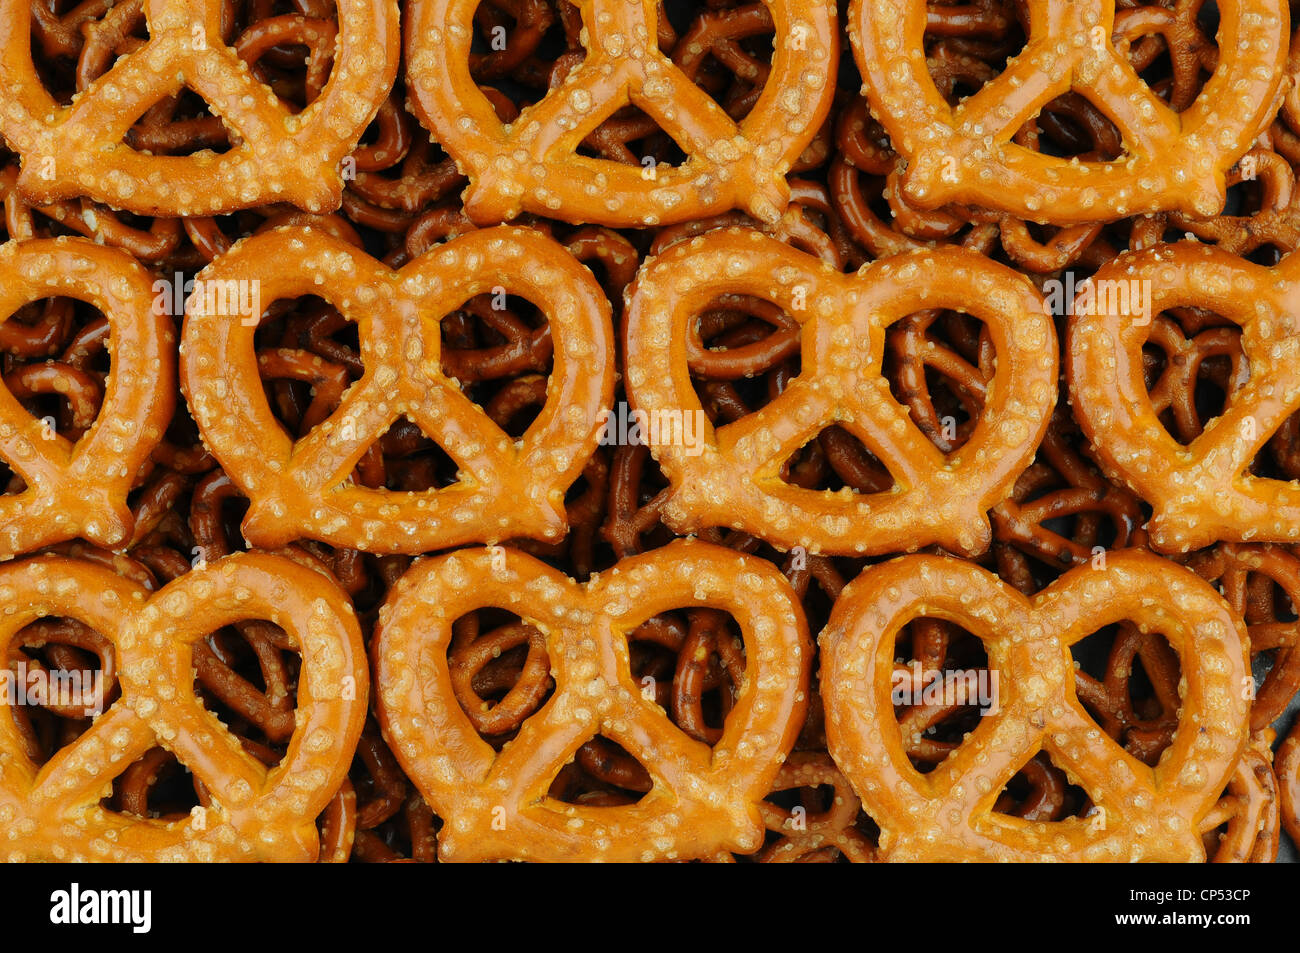 A Closeup of Large Sourdough Pretzels on a bed of smaller pretzels. Stock Photo